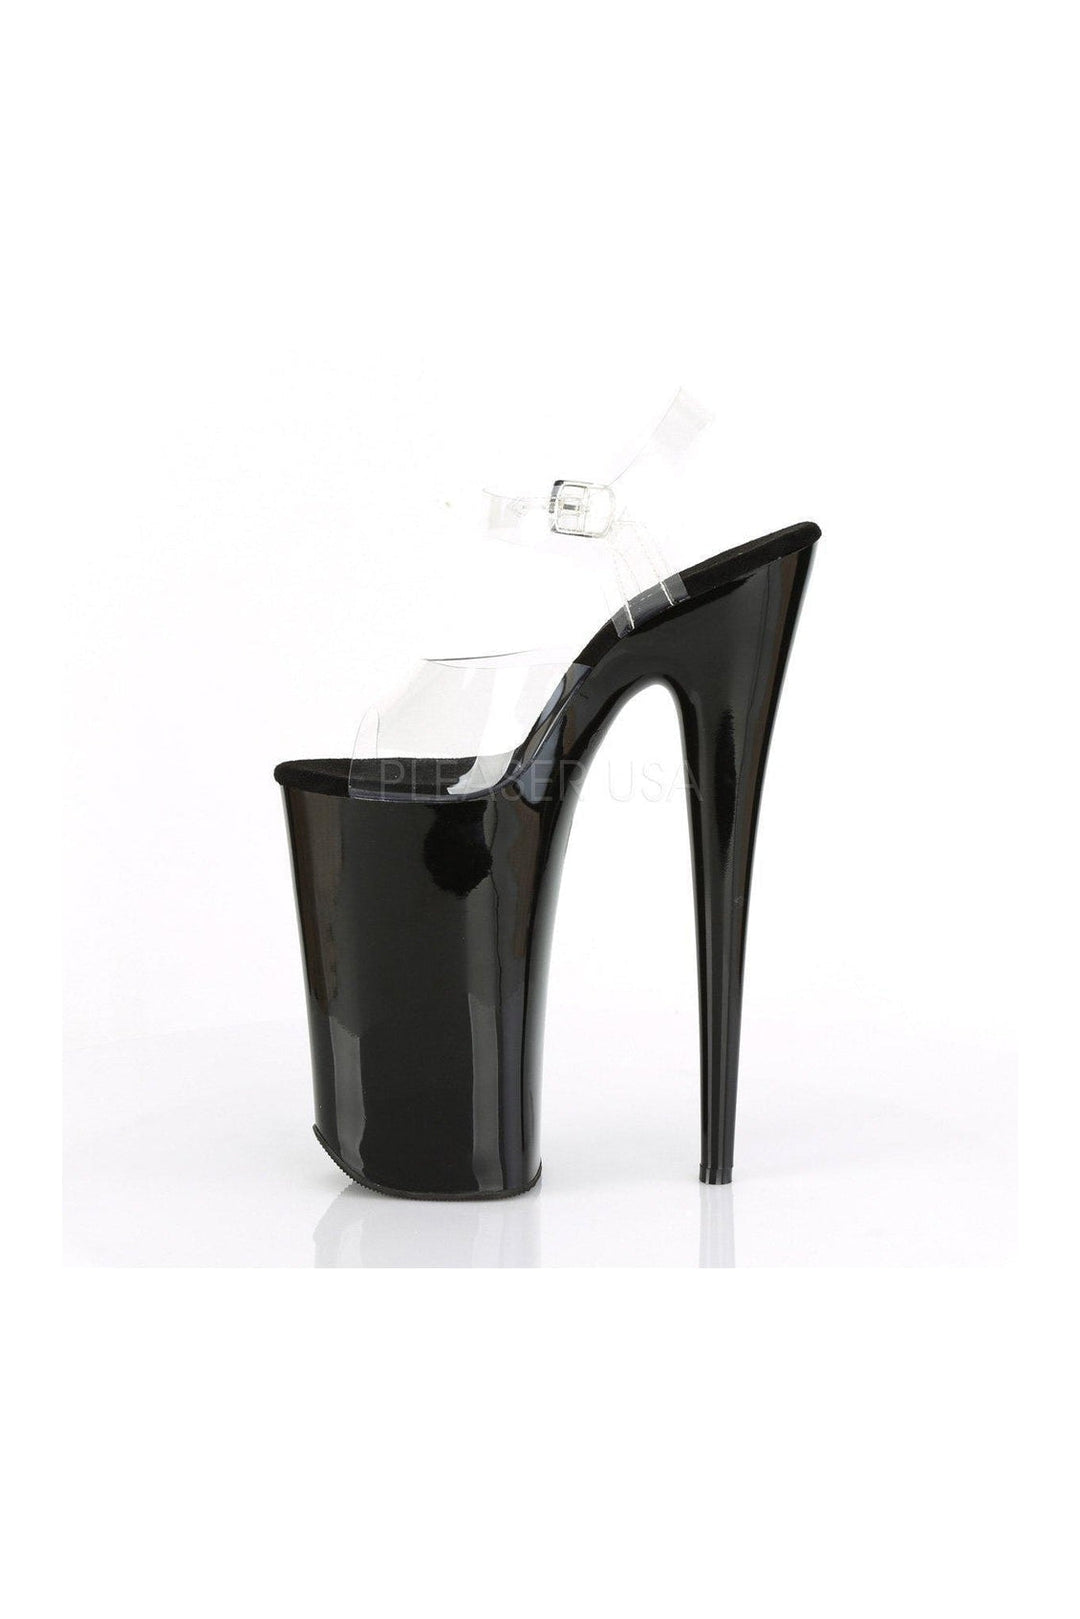 BEYOND-008 Platform Sandal | Black Vinyl-Sandals- Stripper Shoes at SEXYSHOES.COM